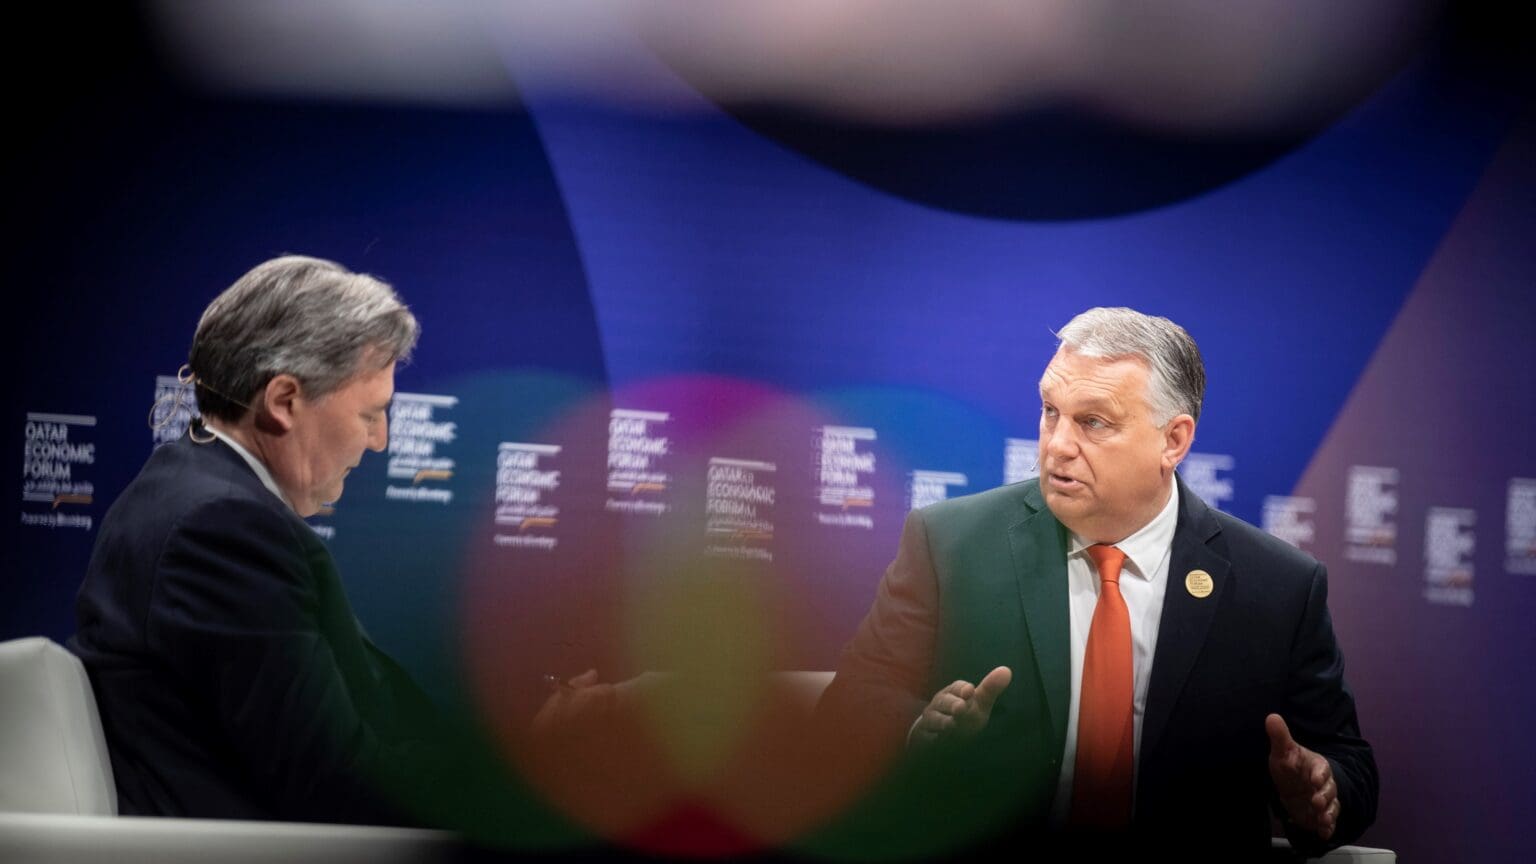 Viktor Orbán Advocates for Peace, Promotes Economic Ties in Qatar